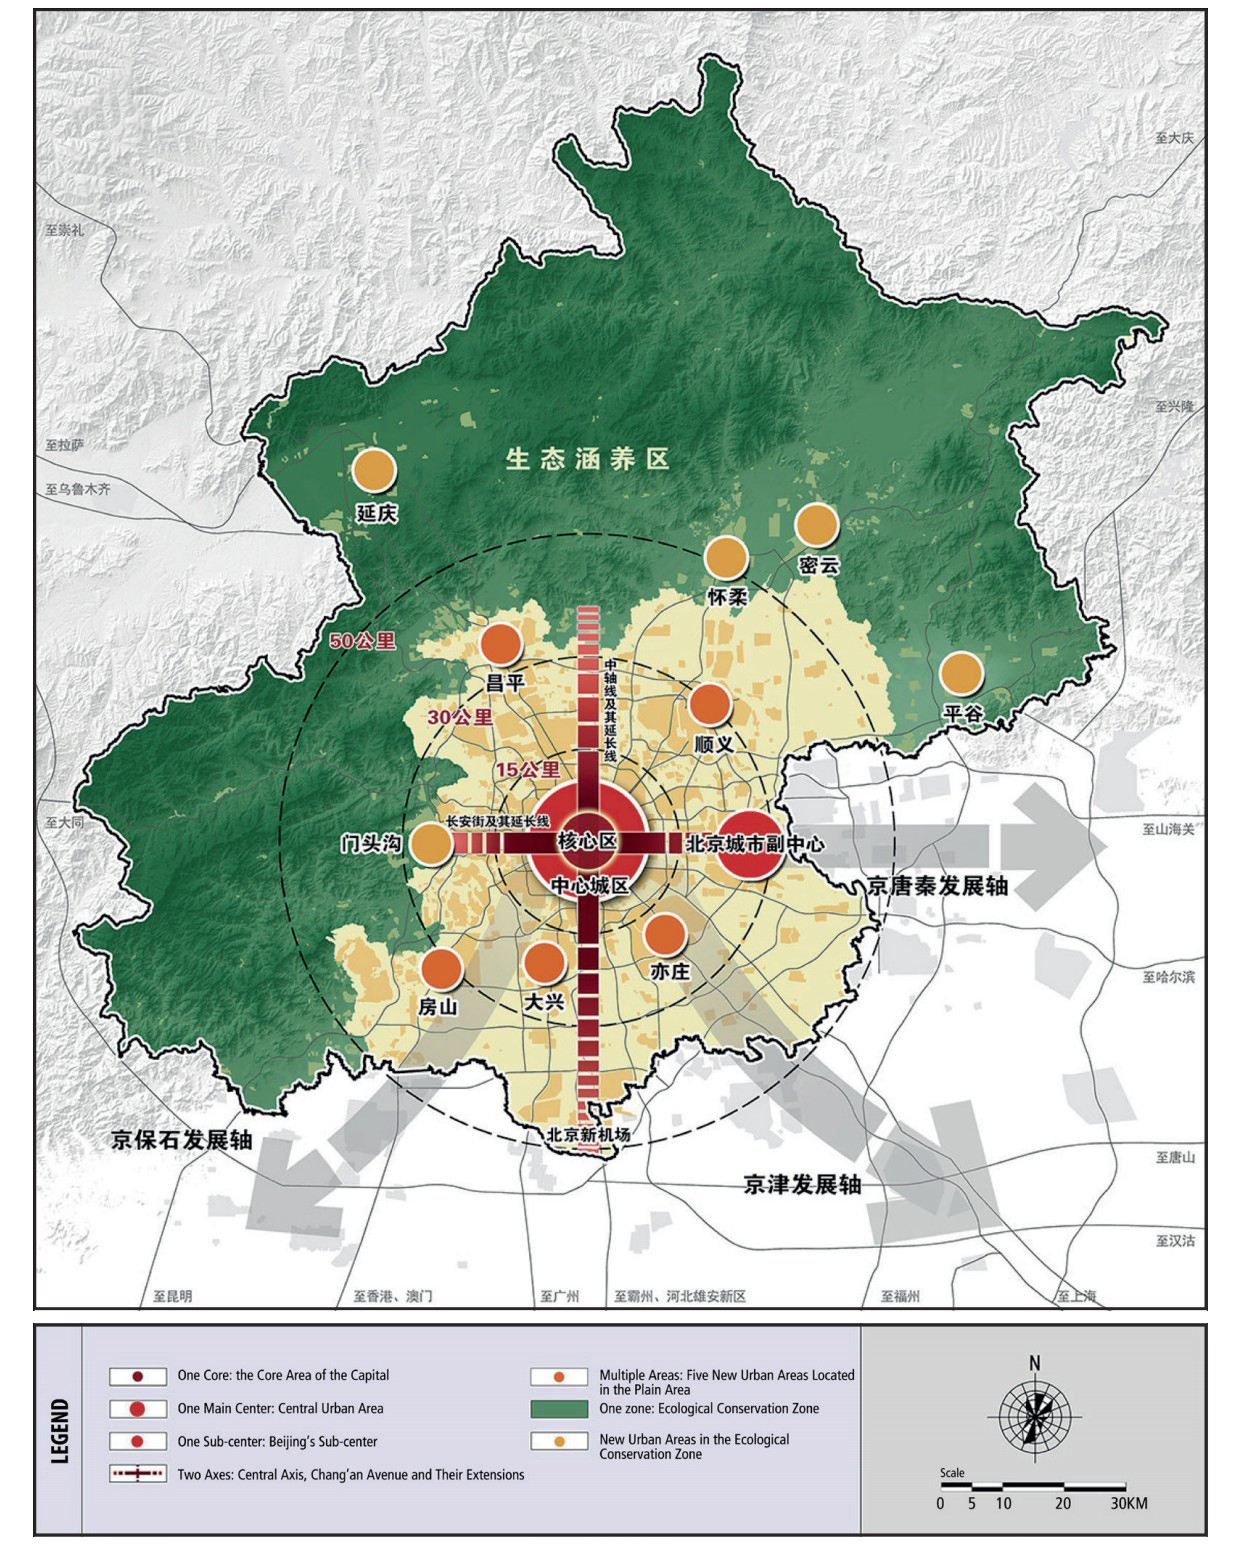 Beijing Master Plan (2016-2035) - Space Planning Framework of Beijing Municipality